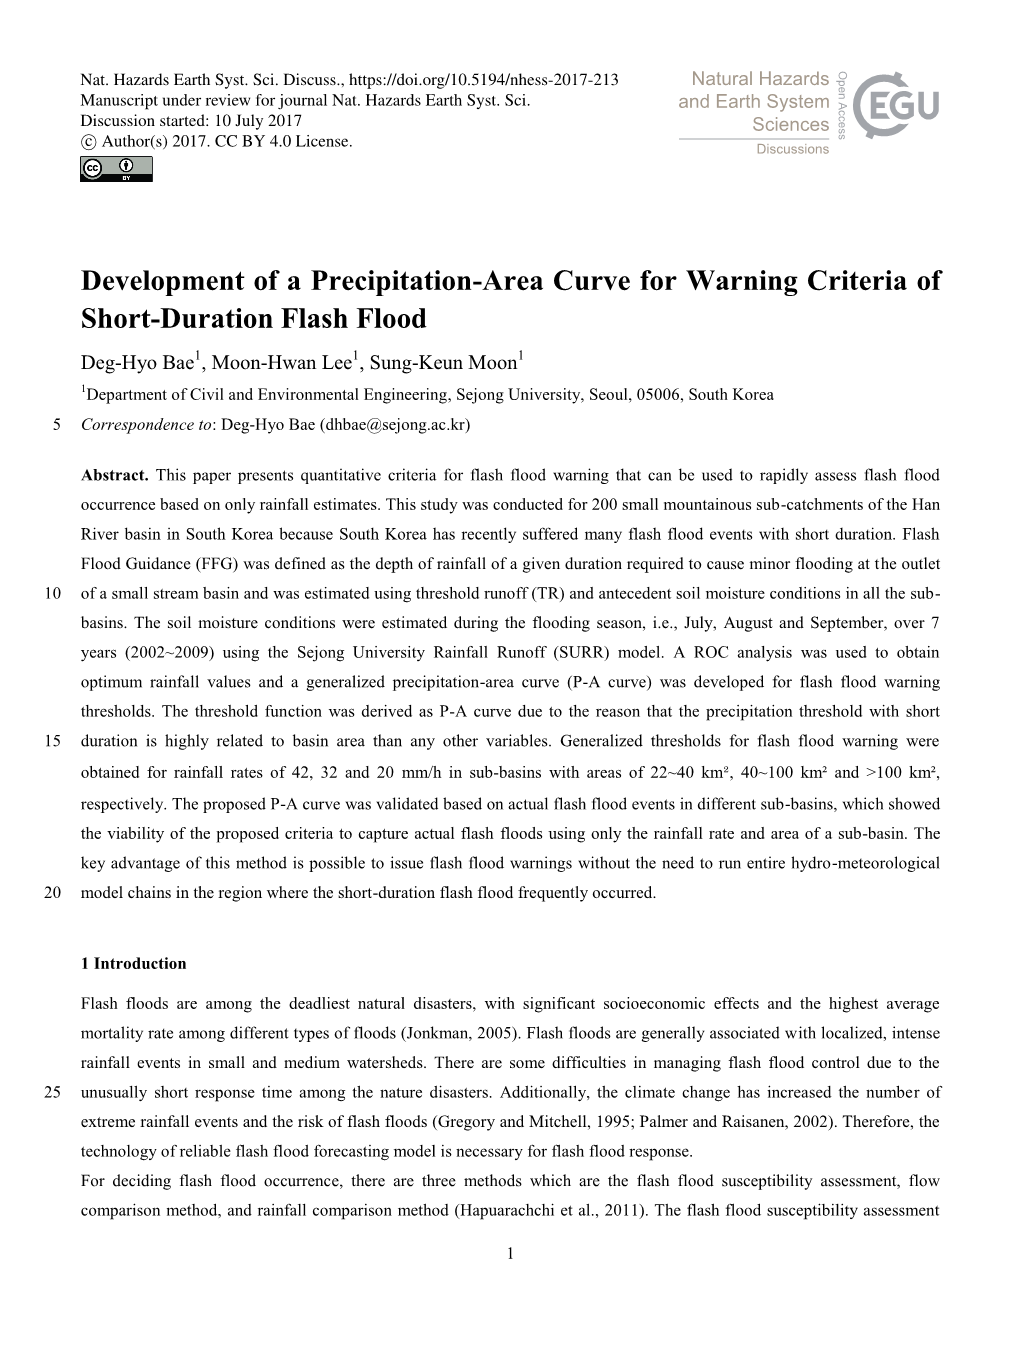 Development of a Precipitation-Area Curve for Warning Criteria of Short